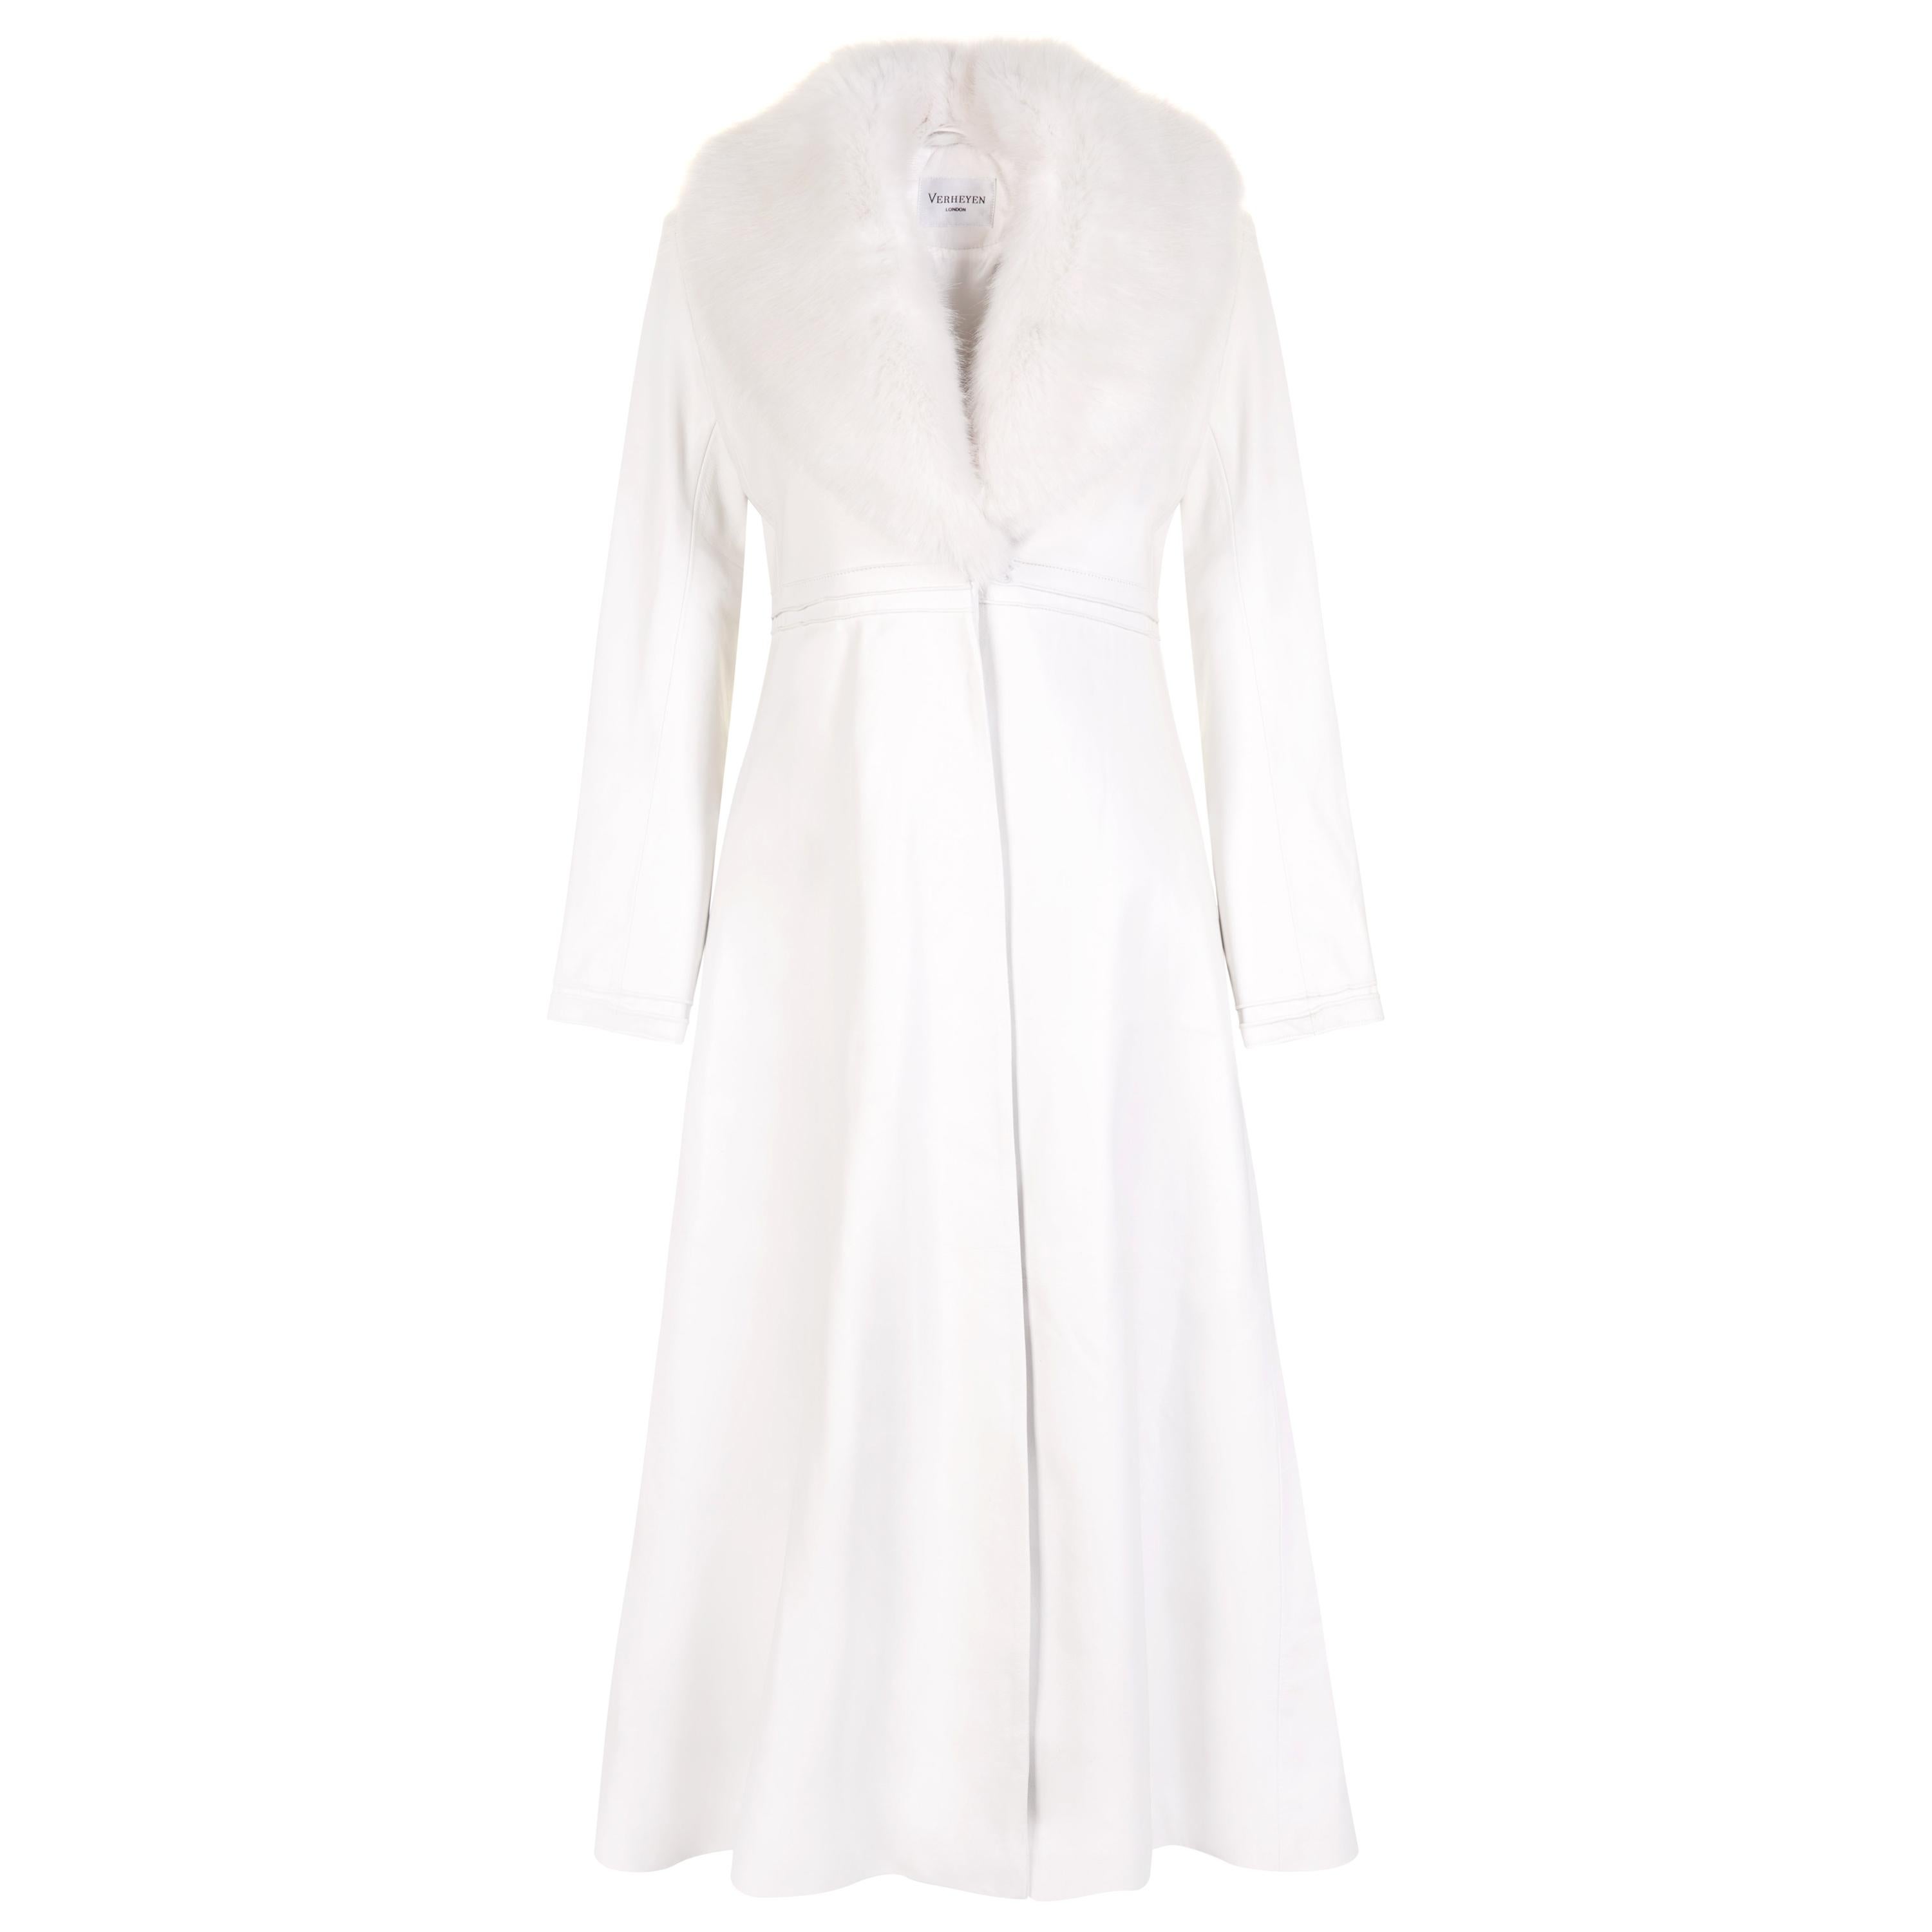 Verheyen London Edward Leather Coat in White with Faux Fur  For Sale